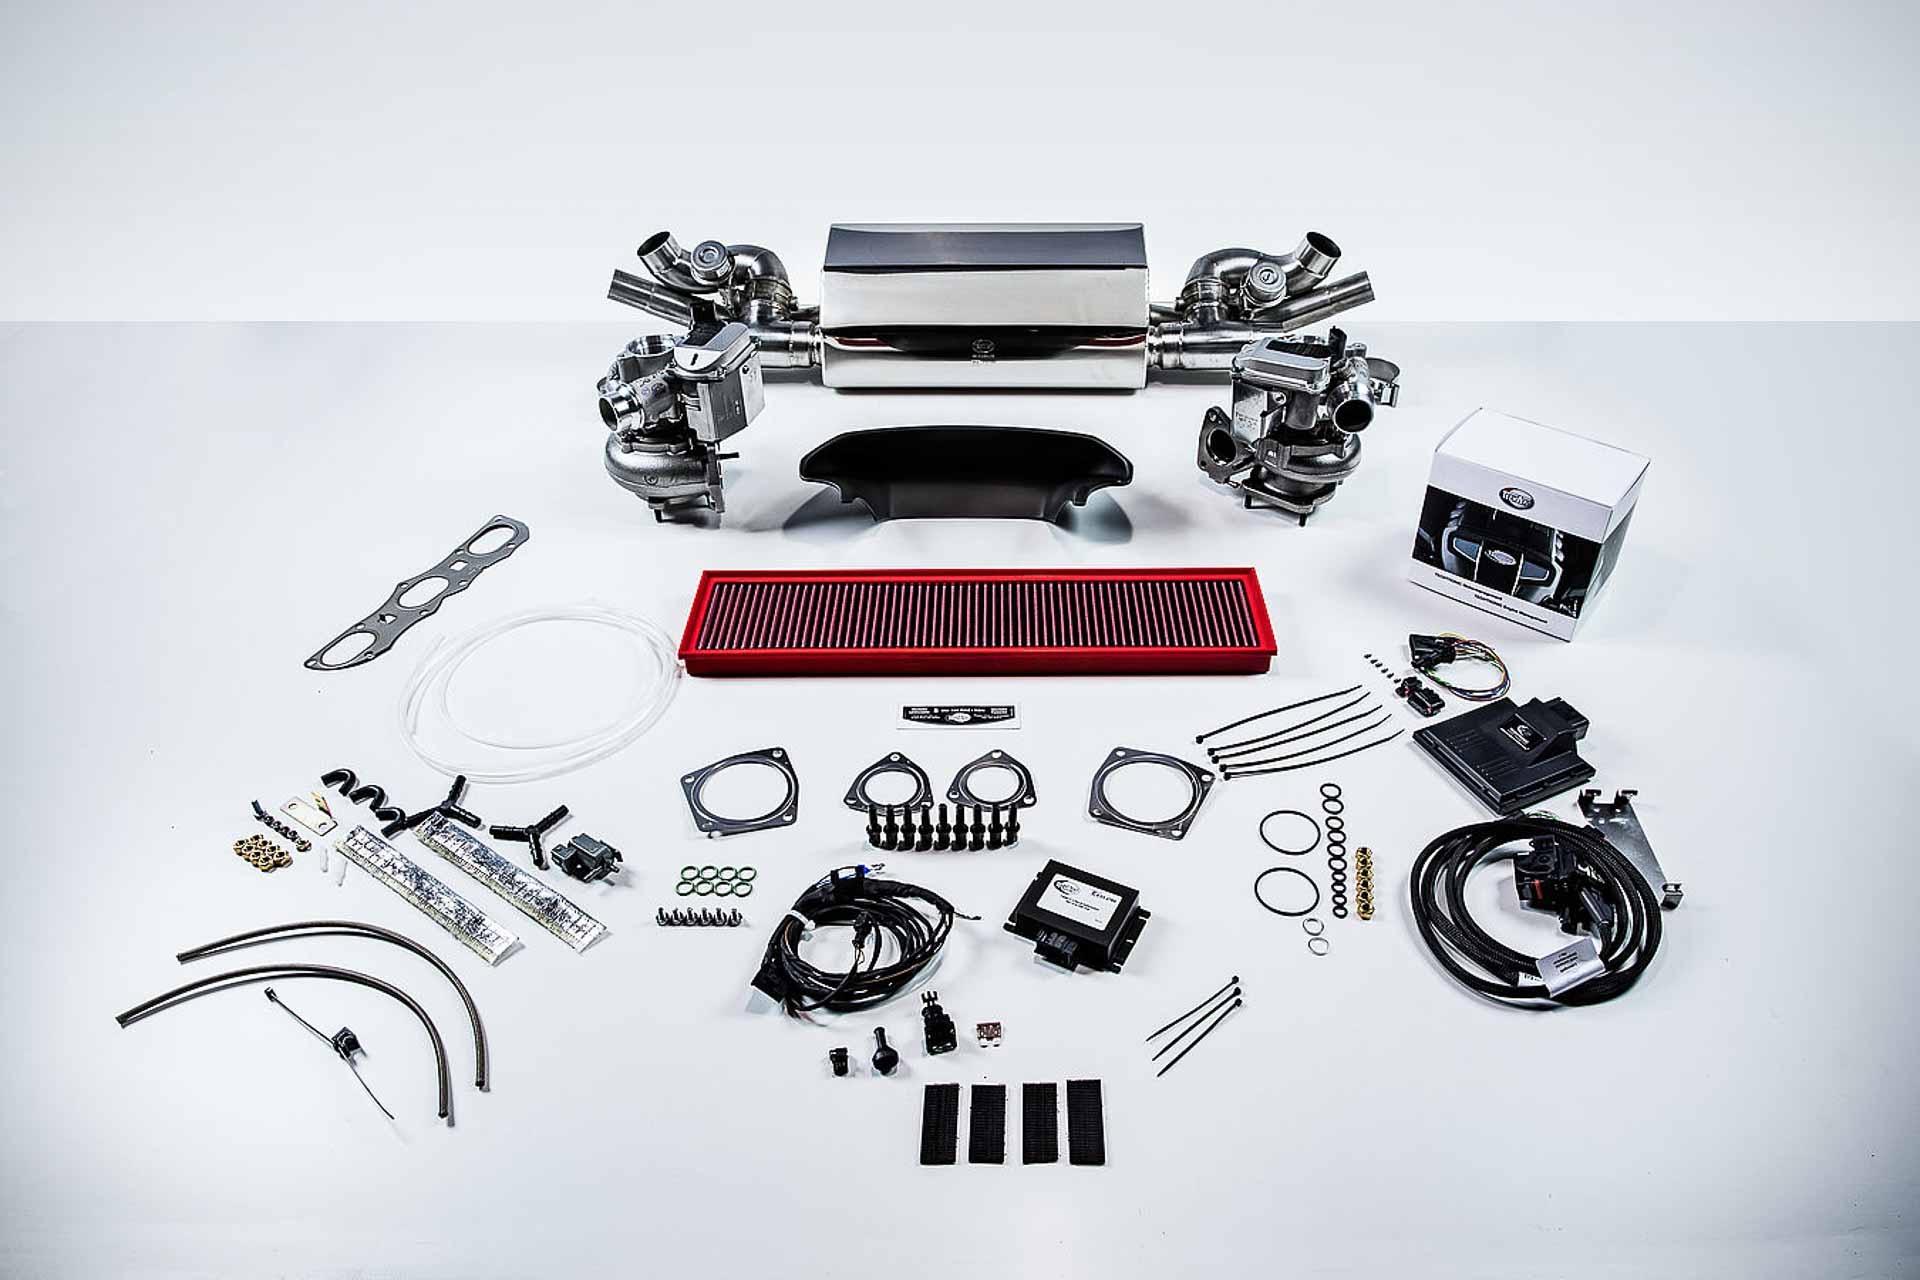 porsche 911 turbo techart, Techart Porsche 911 /991.2/ Turbo, Pitlane Tuning Shop